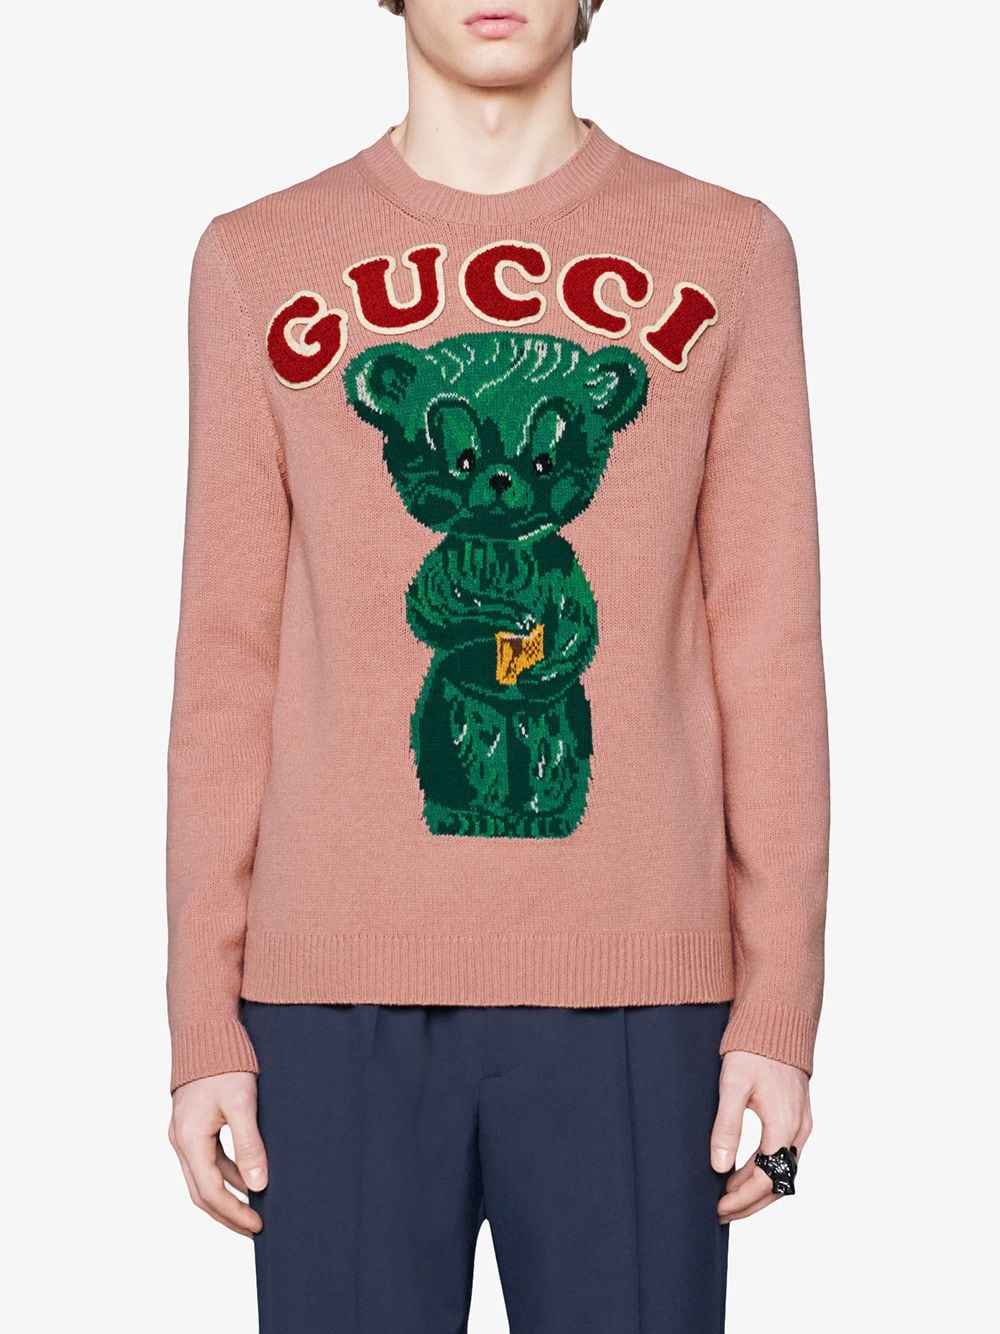 Gucci, Shirts & Tops, Gucci Teddy Bear Sweater